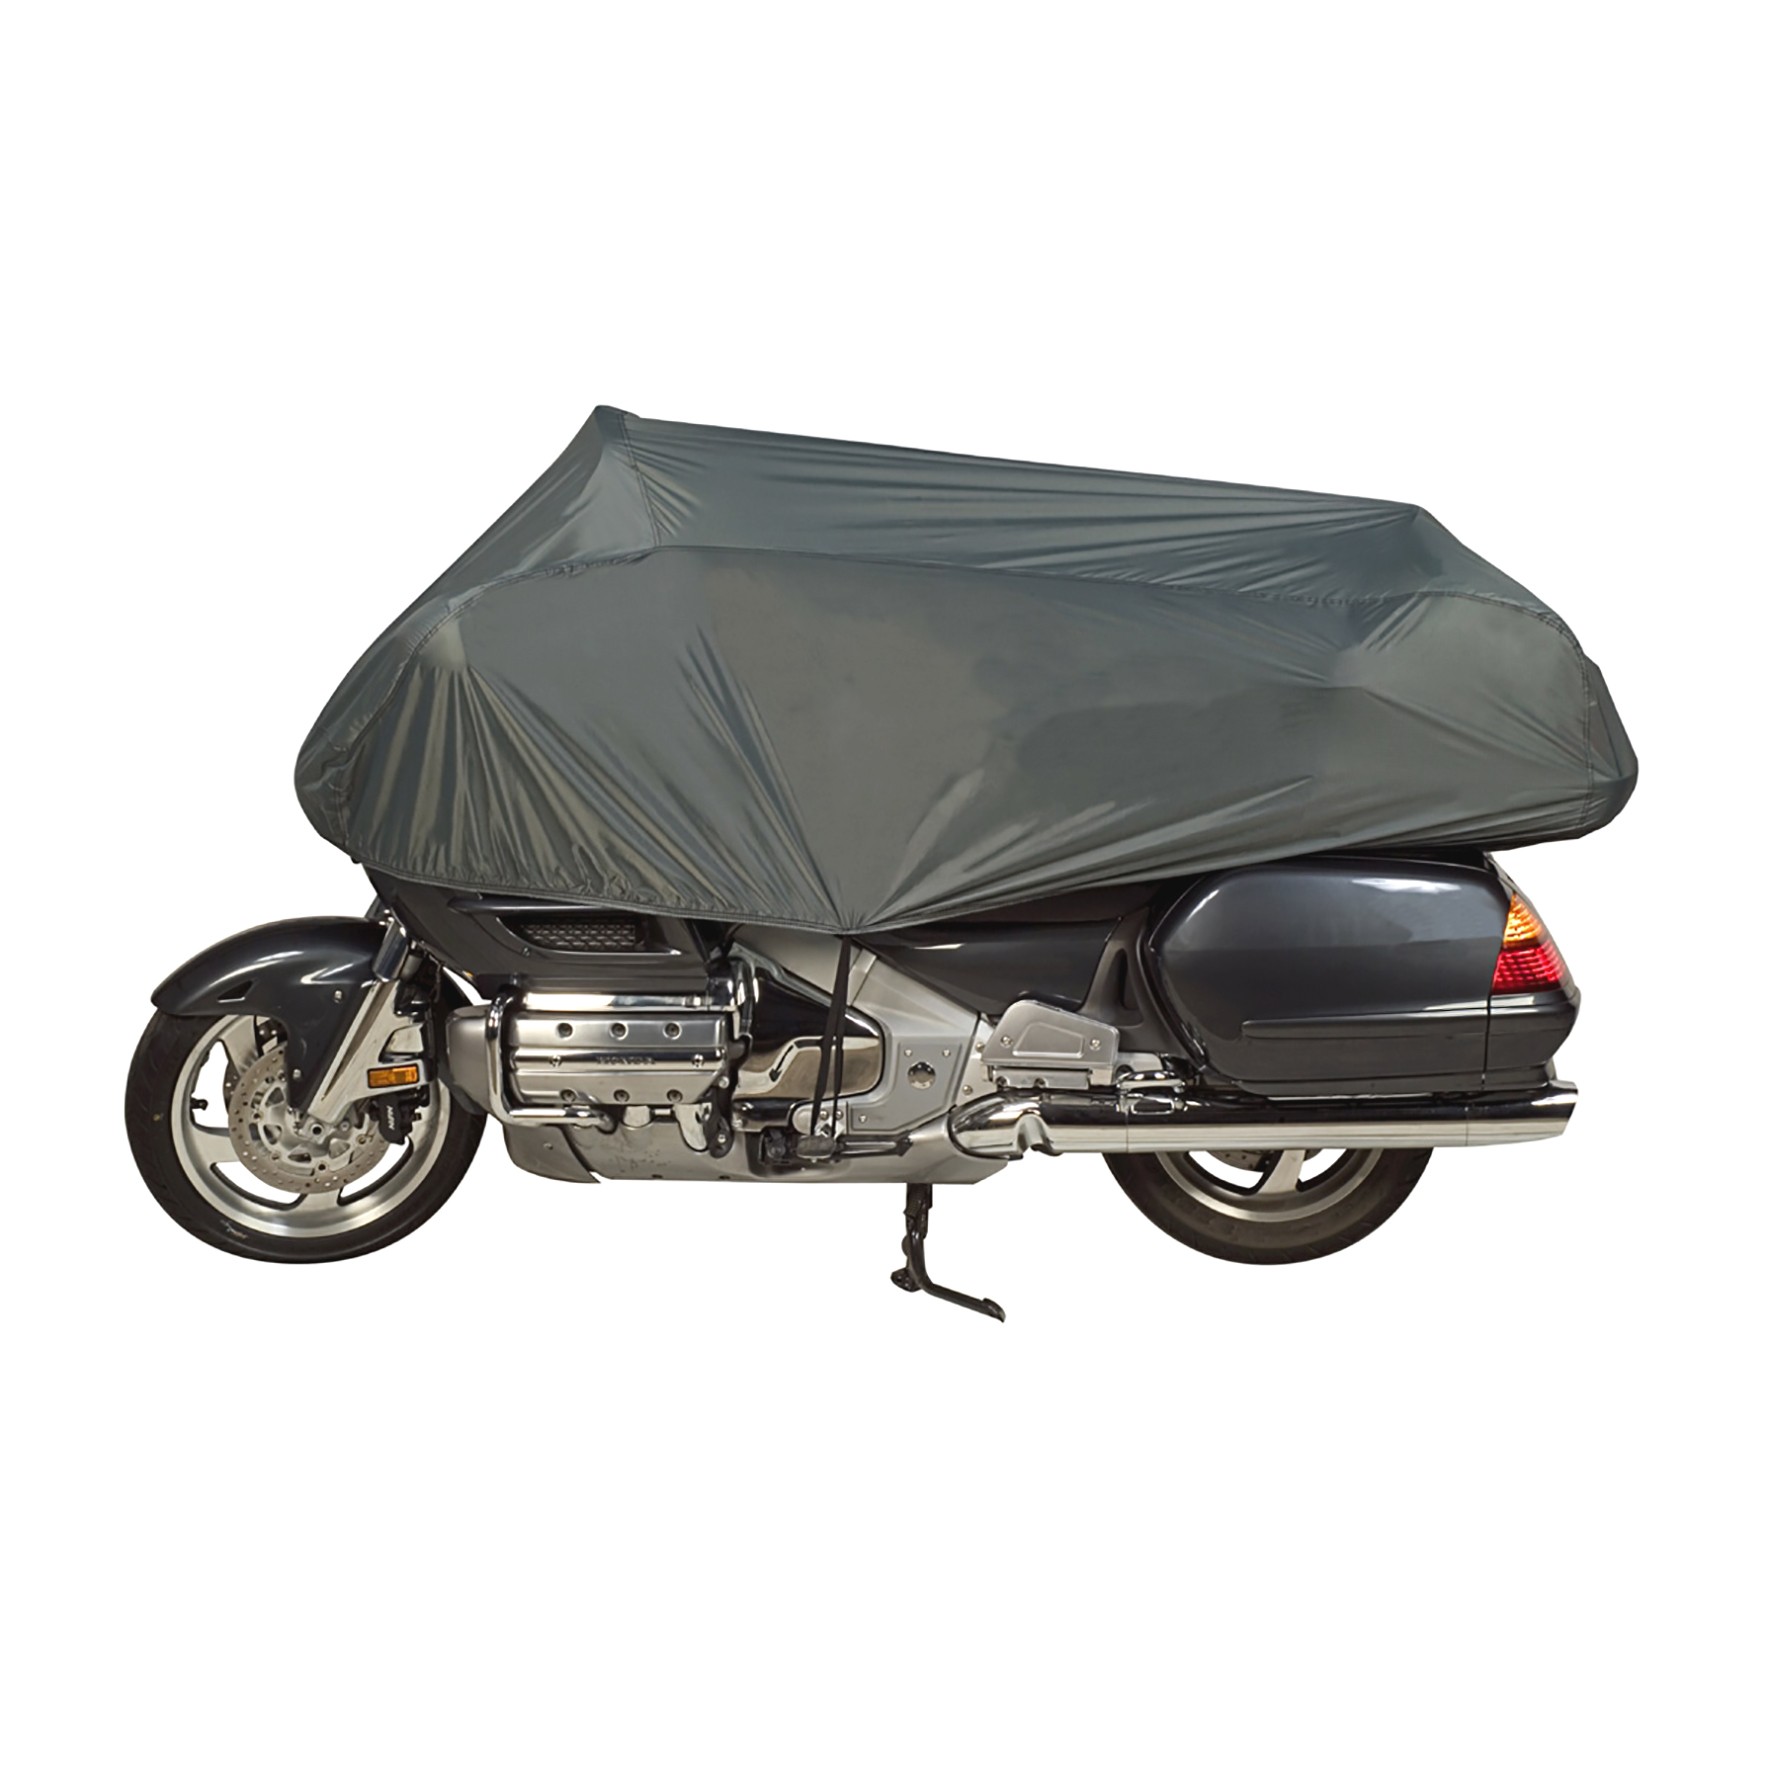 XXL Motorcycle Cover Bag Fit Suzuki Intruder VS 700 750 1500 1400 800 Volusia GL